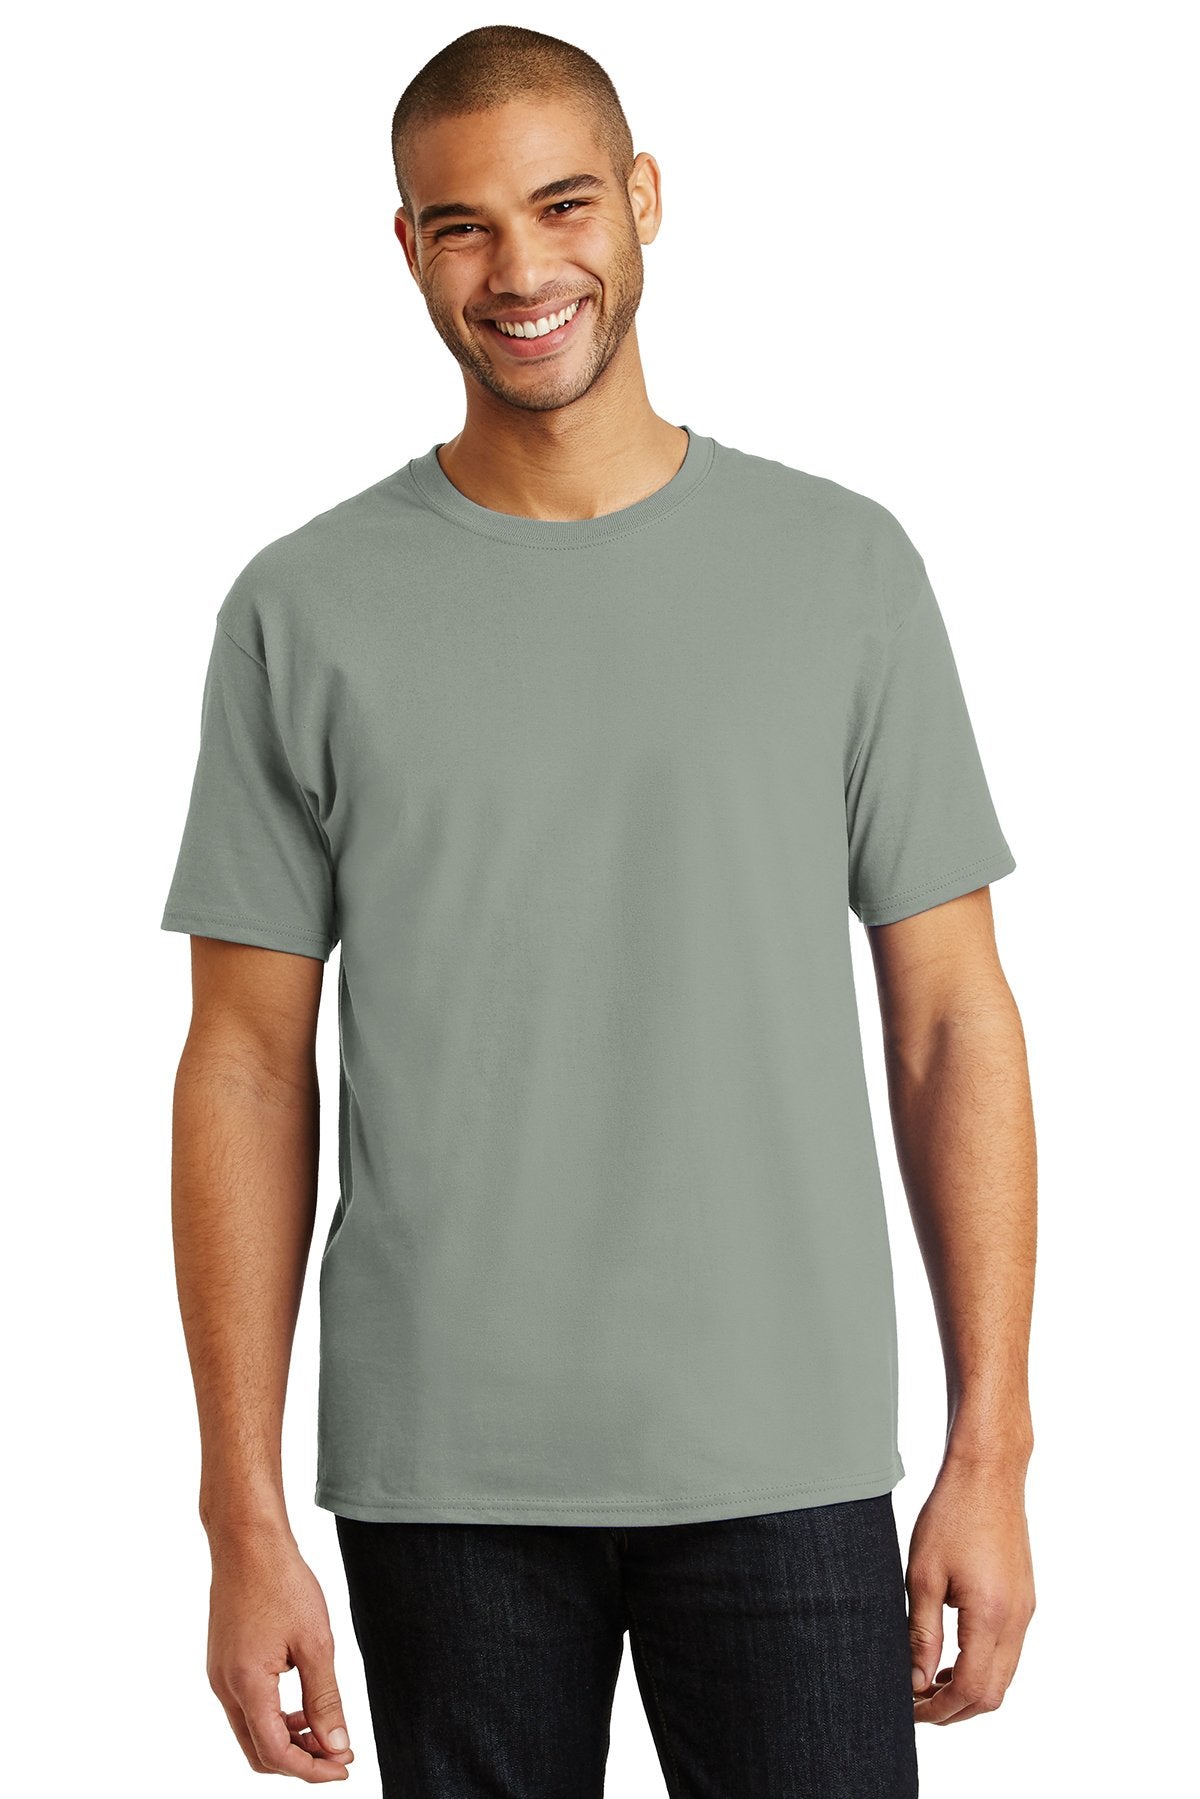 hanes tagless cotton t shirt 5250 stonewashed green